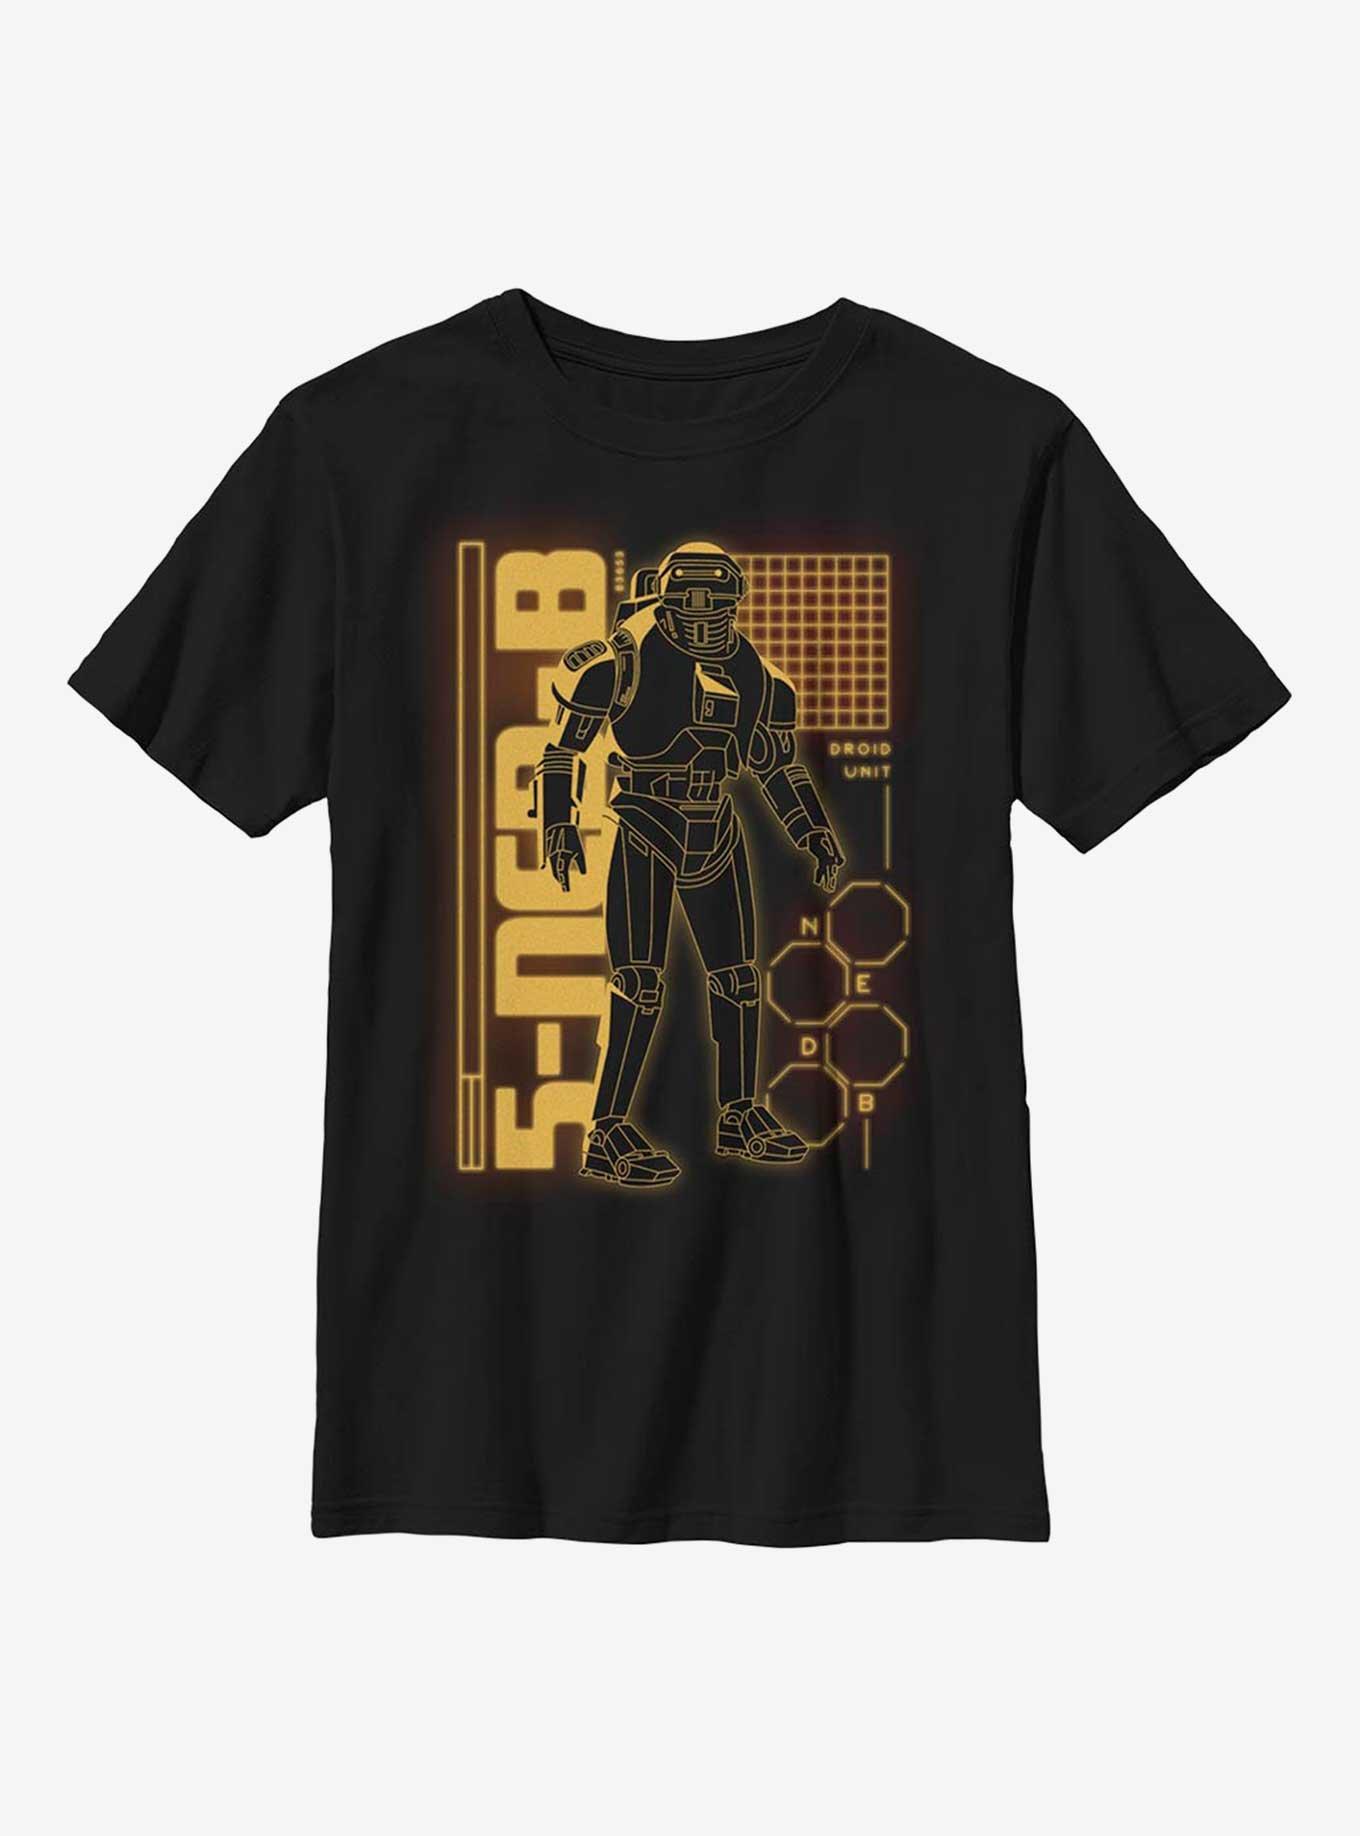 Star Wars Obi-Wan Kenobi 5-NED-B Droid Youth T-Shirt, BLACK, hi-res